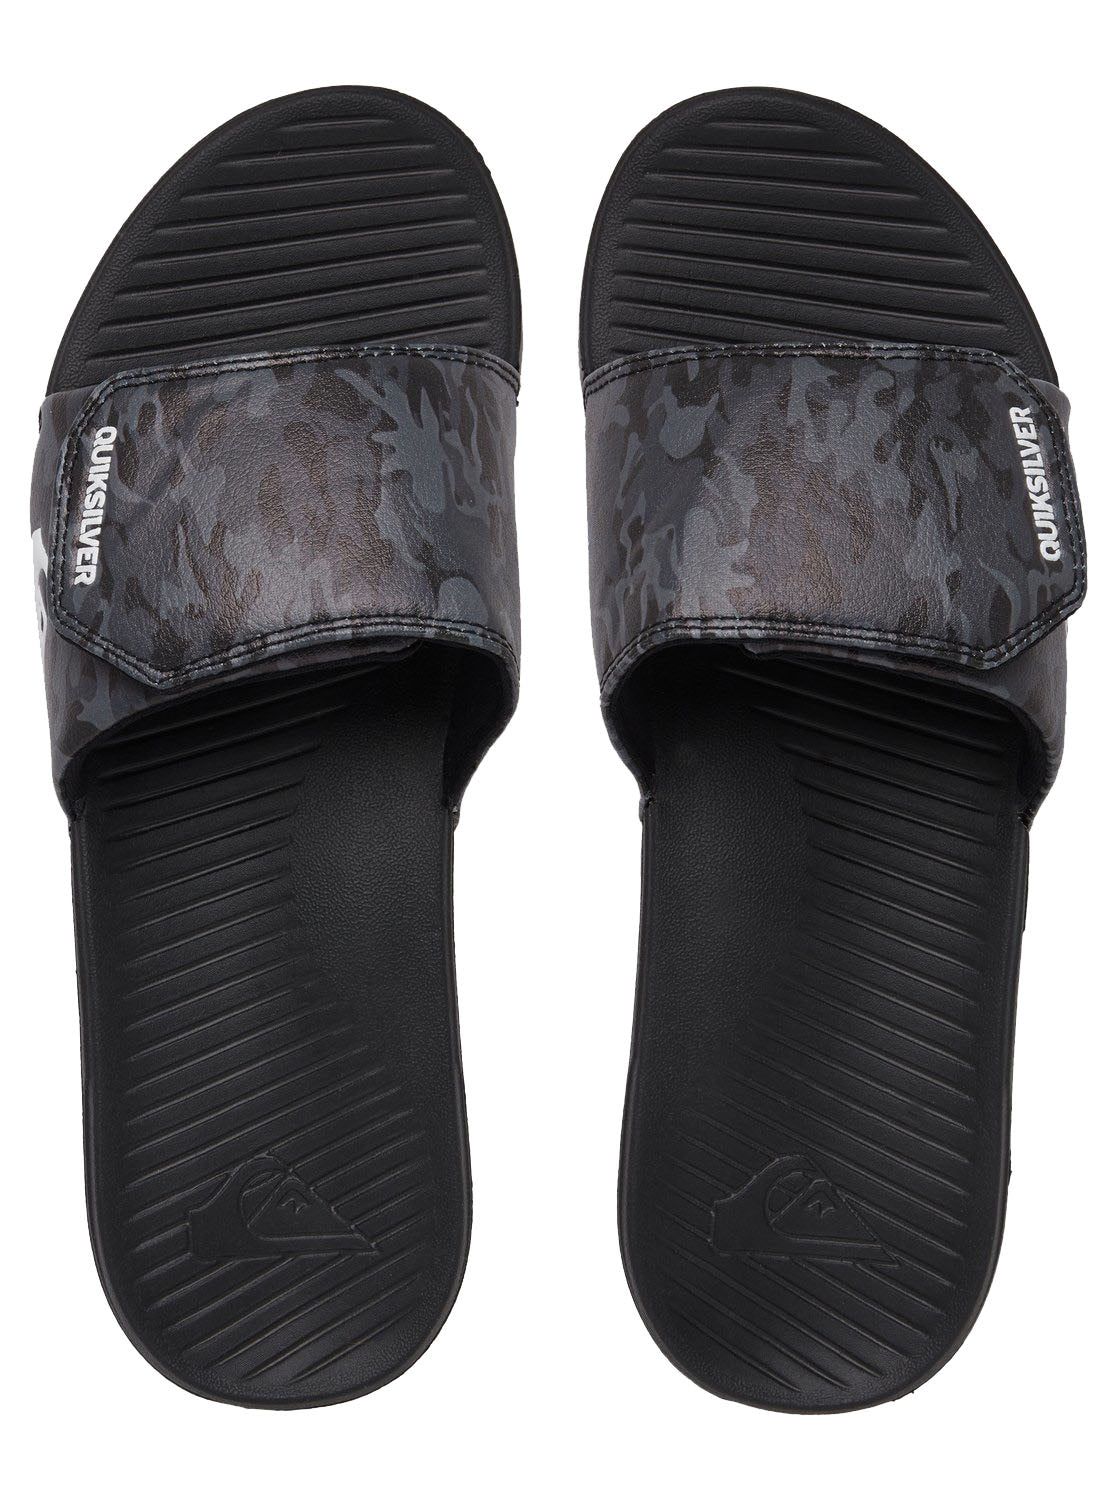 Quiksilver Bright Coast Adjust Mens Sandal XSKK-Grey-Black-Black 7